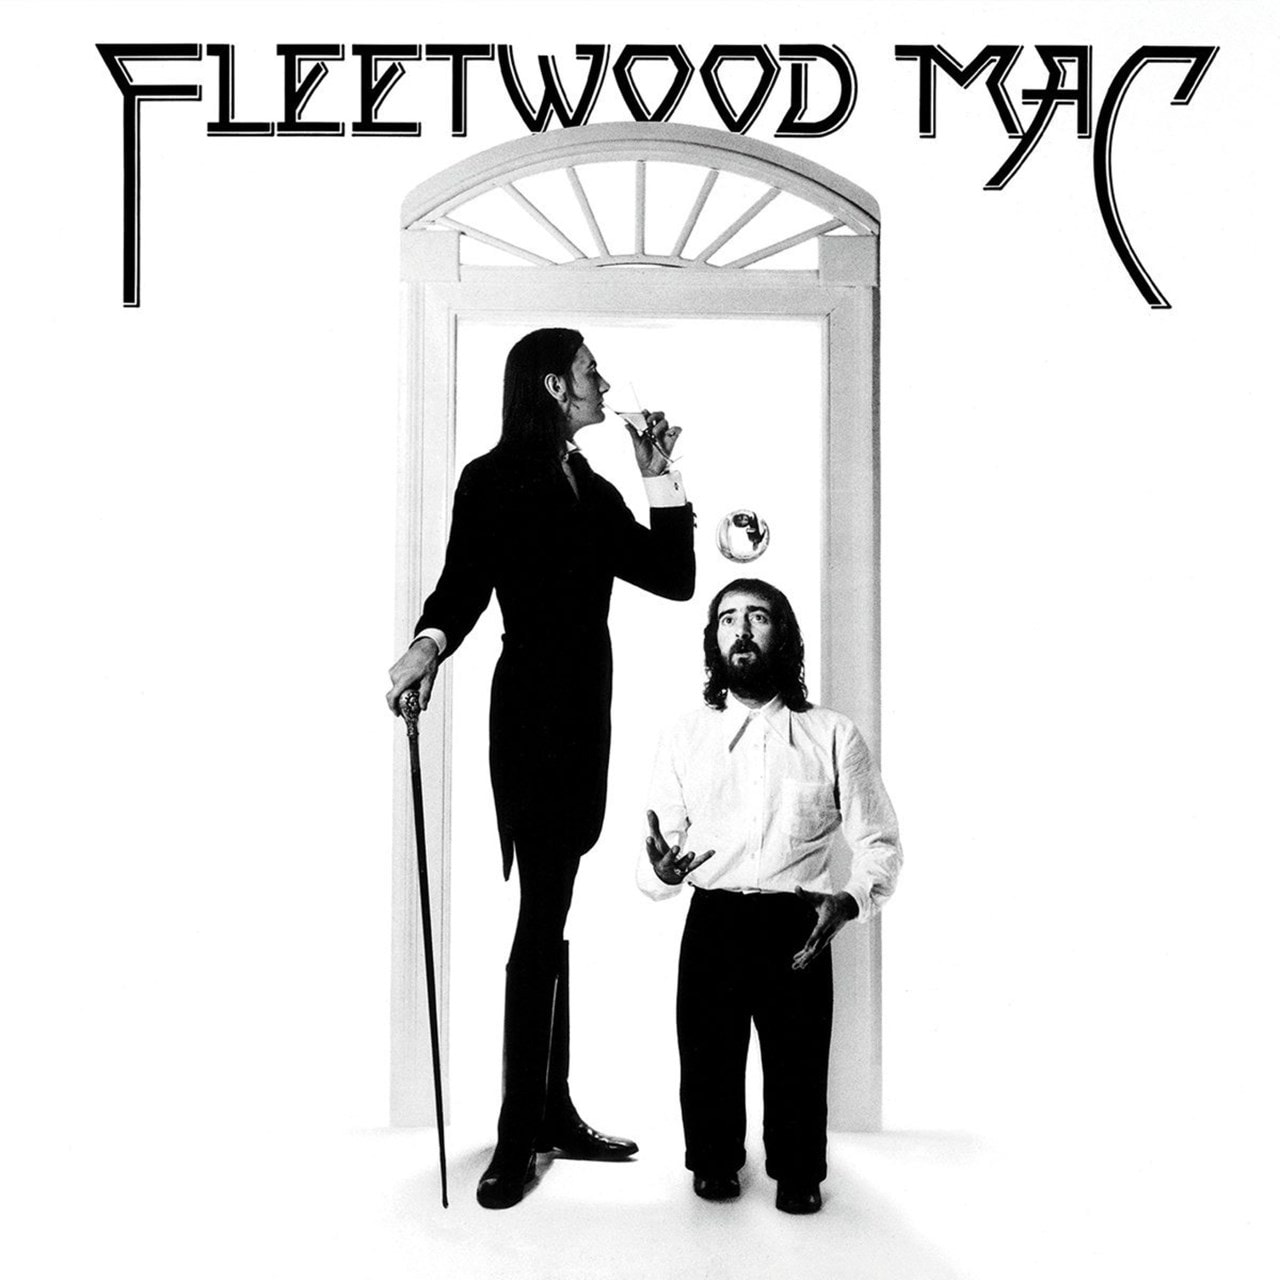 fleetwood mac free album download